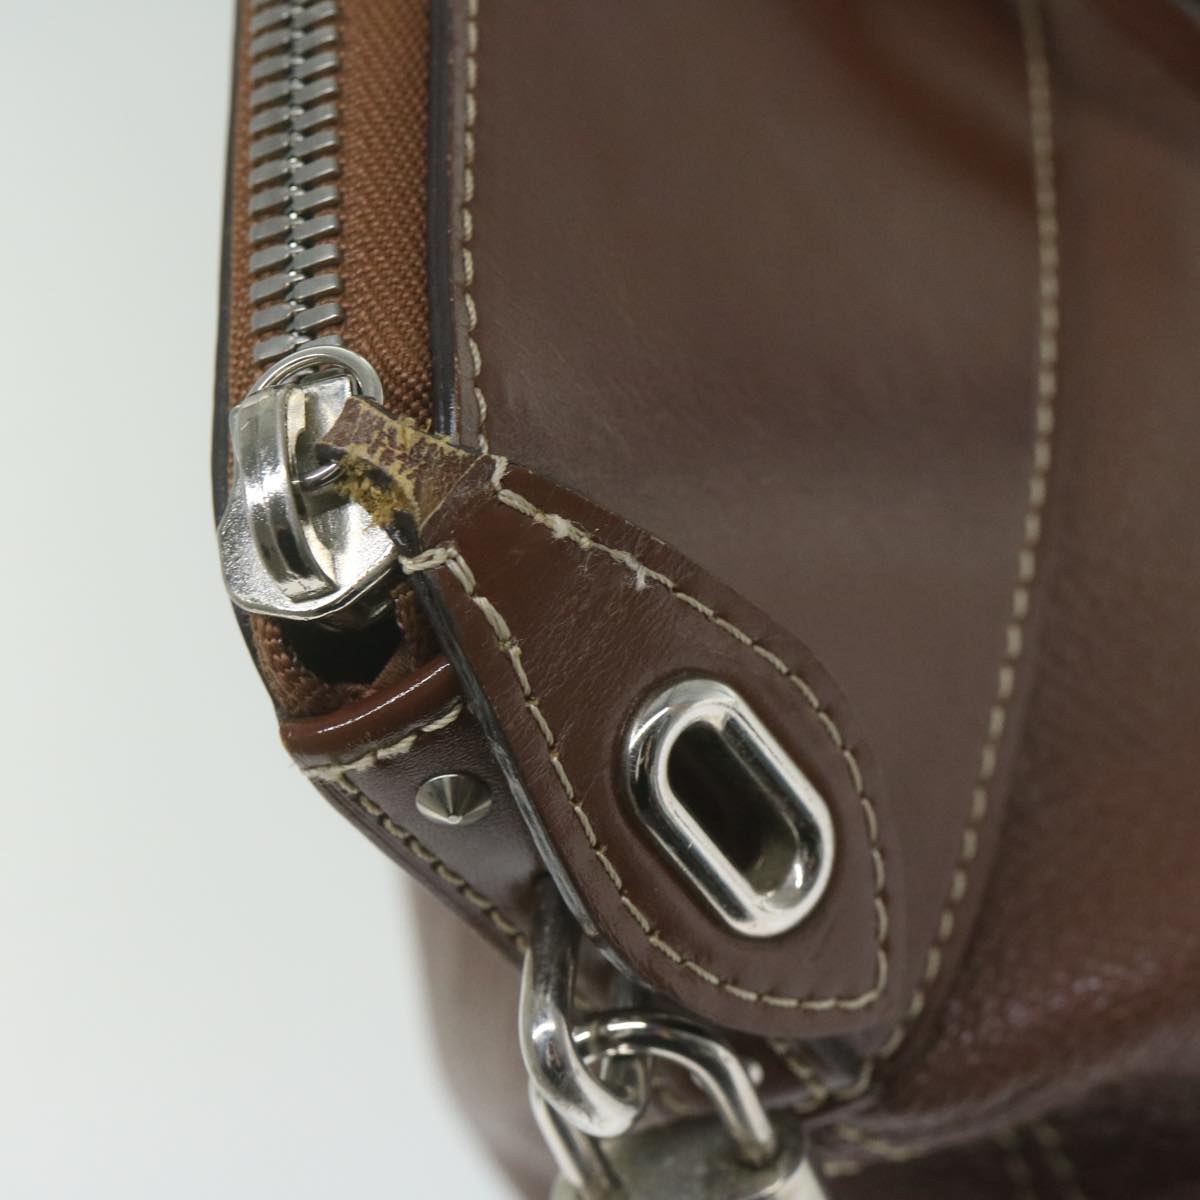 LOUIS VUITTON Suhari Lockit PM Hand Bag Leather Brown M91889 LV Auth bs10903